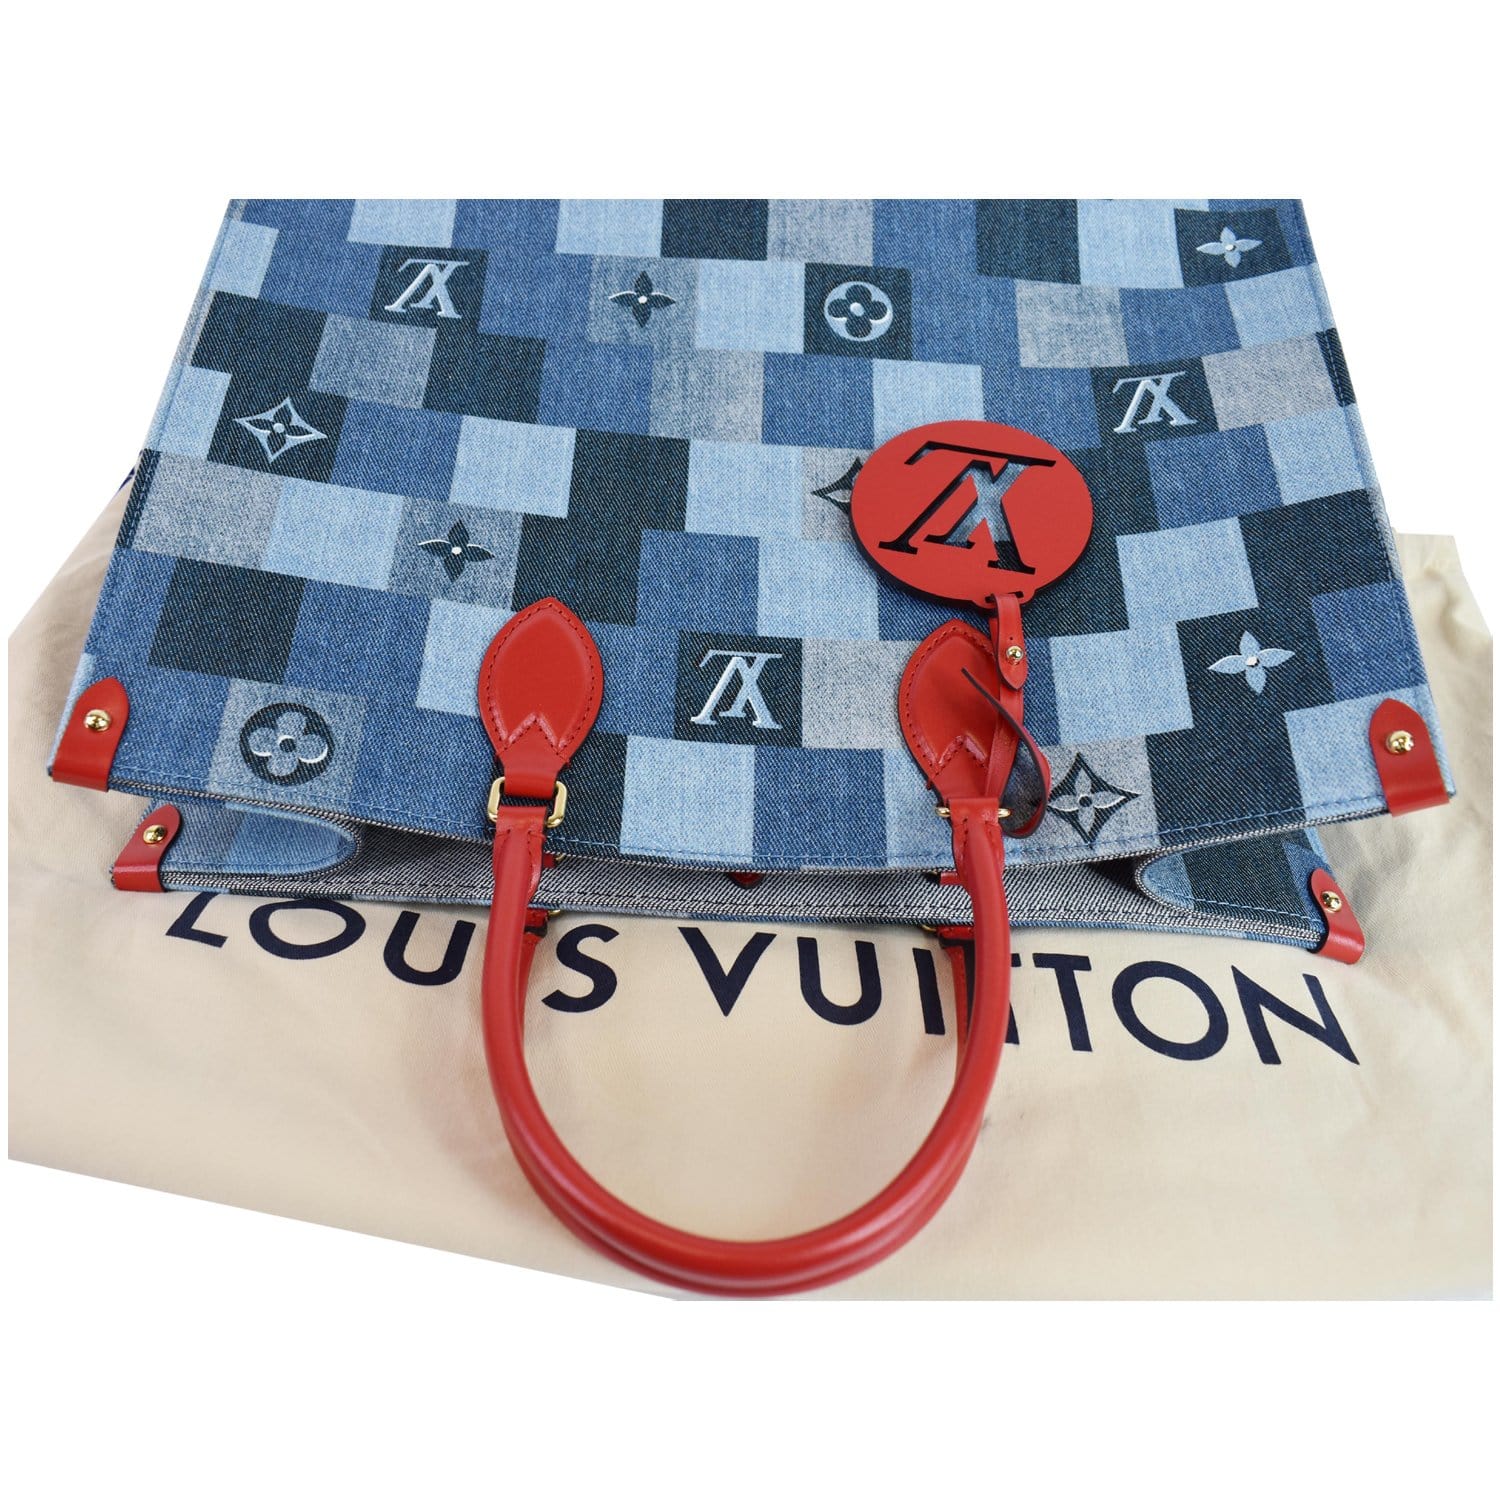 Louis Vuitton Denim On the Go Thorough Review